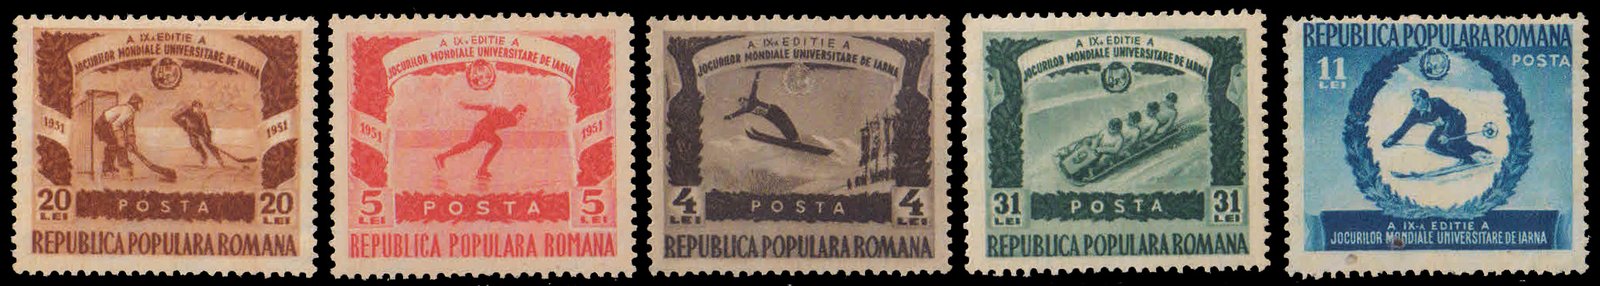 ROMANIA 1951-Winter Sports, Ski-Jumper, Ice Hockey, Skater, Set of 5, MNH, S.G. 2095-99